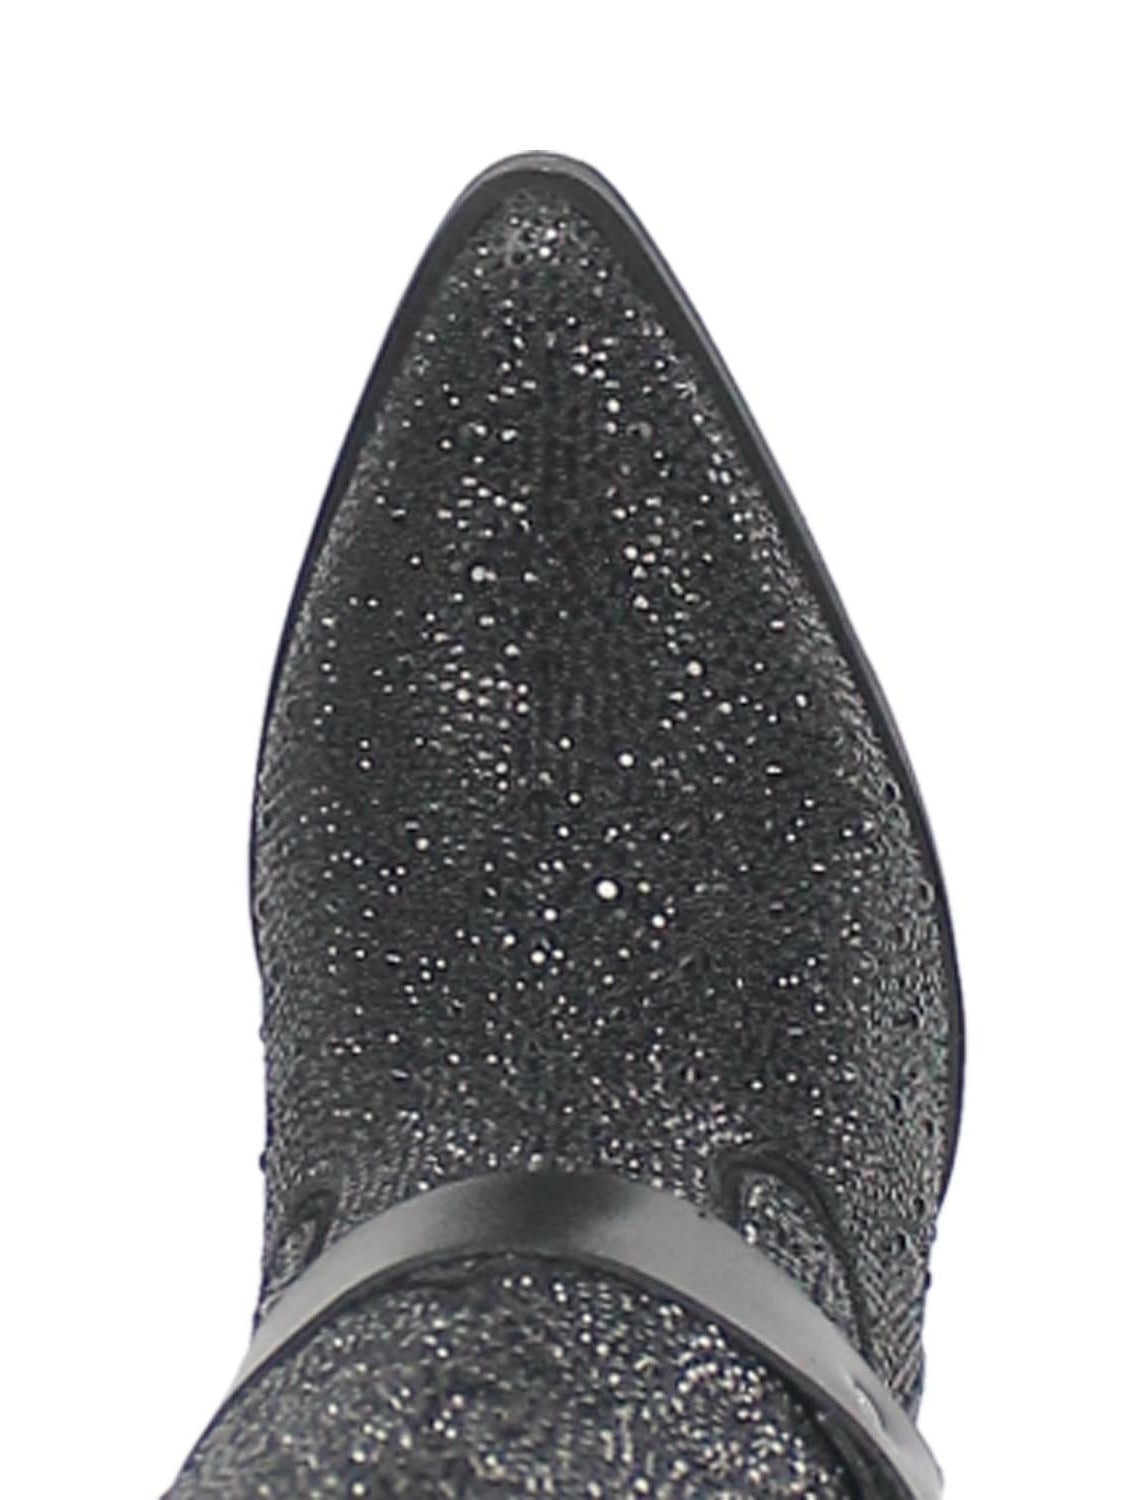 Crown Jewel Boot by Dan Post - Black